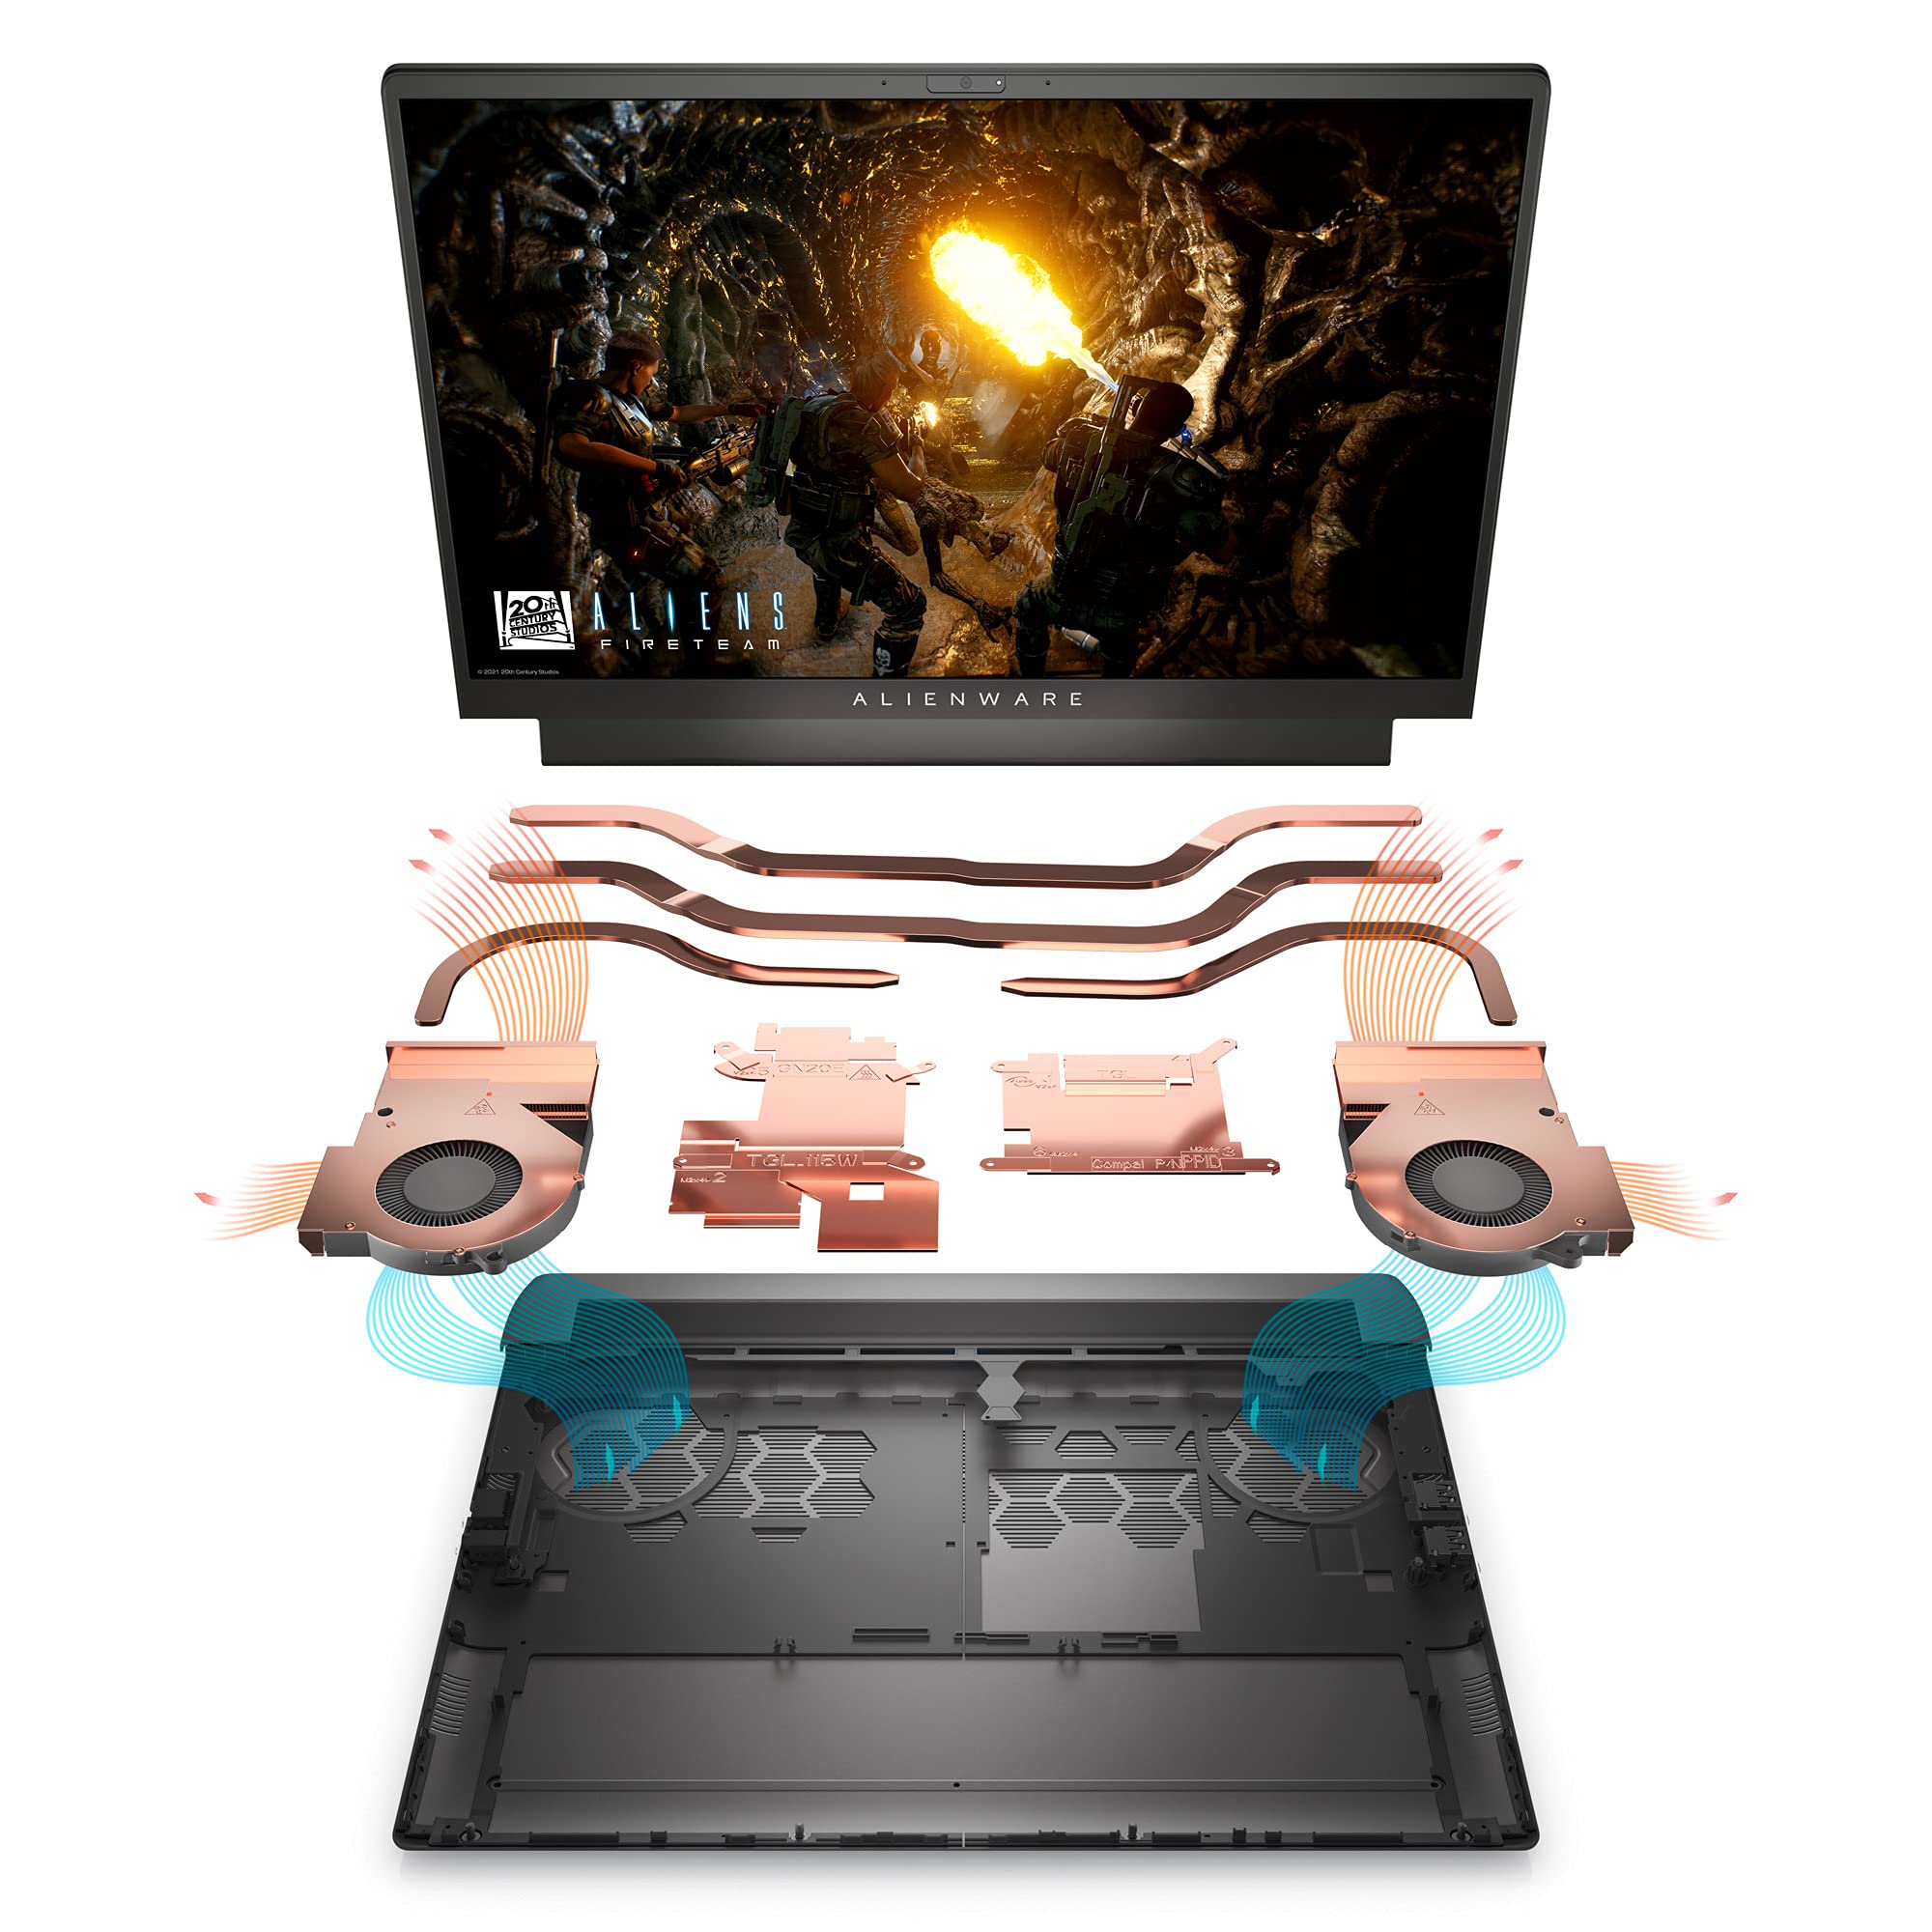 Alienware M15 R6 VR Ready Gaming Laptop - 15.6 inch QHD Display, 240Hz Refresh Rate, Intel Core i7-11800H, 16GB DDR4 RAM, 512GB SSD, NVIDIA GeForce RTX 3070 8GB GDDR6, Windows 11- Black